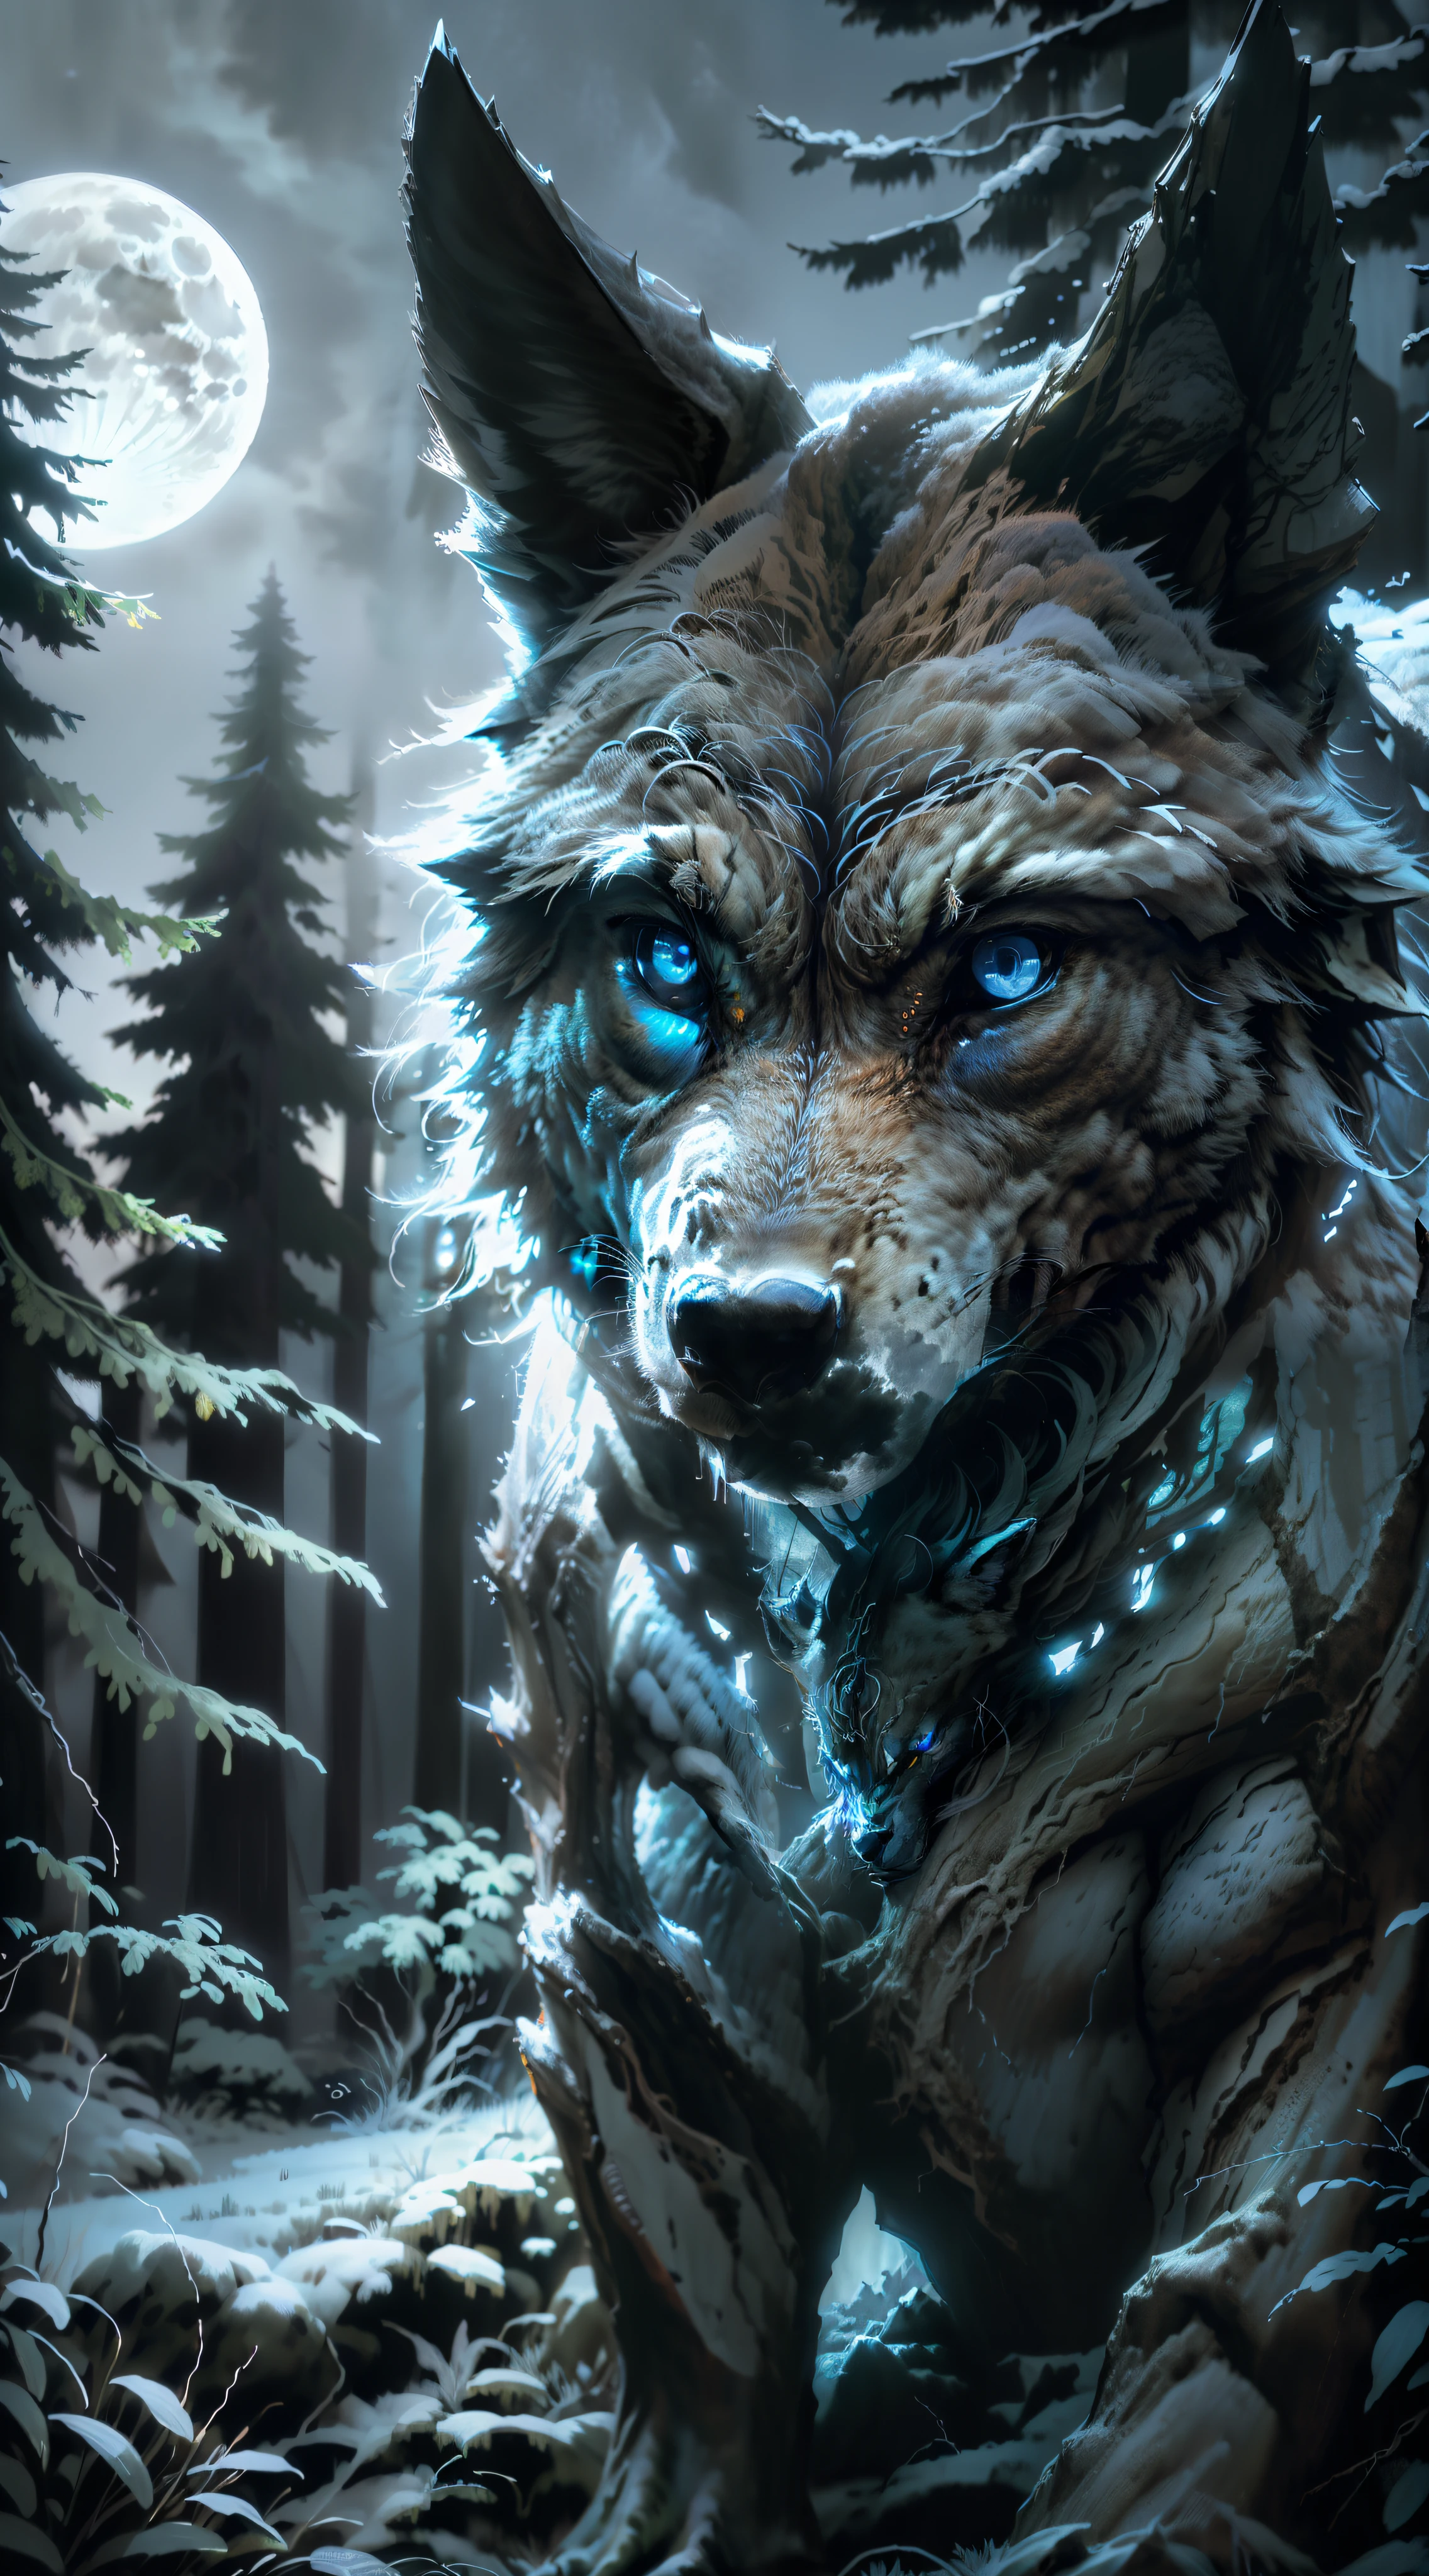 (4k, 人类发展报告, 图像焦点) 一群狼, 有色 "黑色的, 白色的, 蓝色的". 夜森林" 开放森林", 背景中的满月. 狼猎人 (真实感)